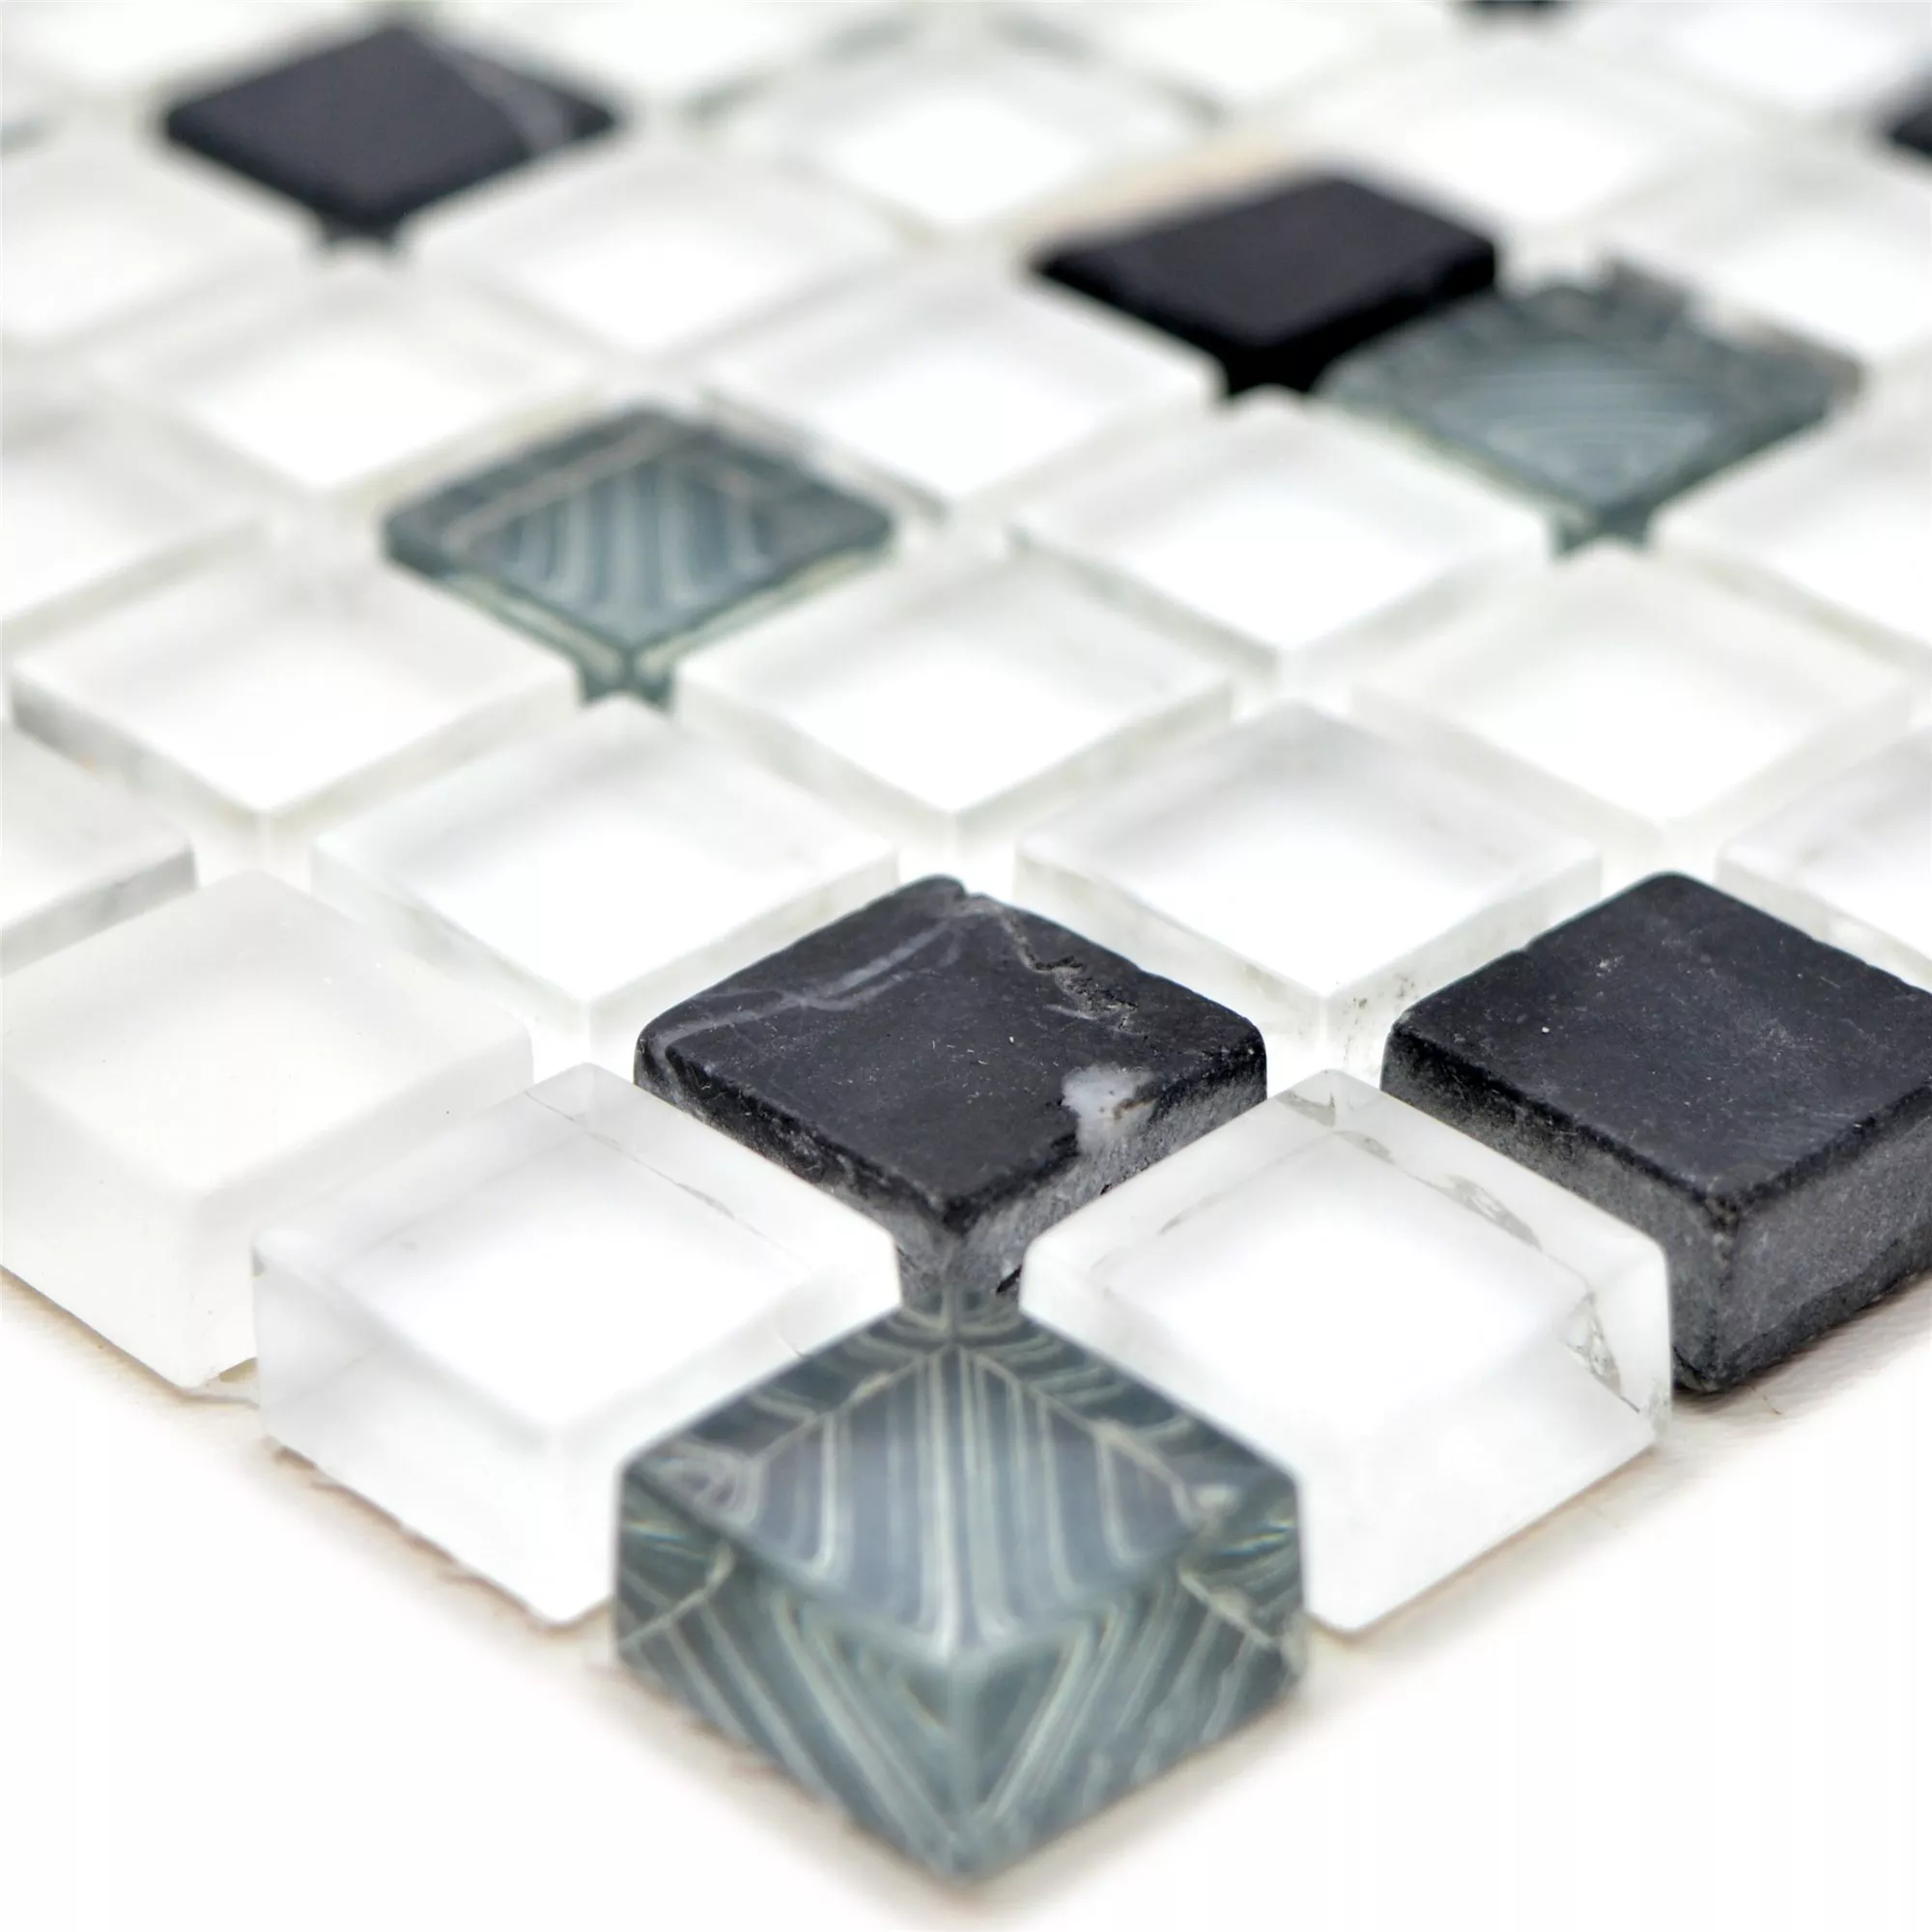 Sample Glass Mosaic Natural Stone Tiles Nexus Superwhite Black